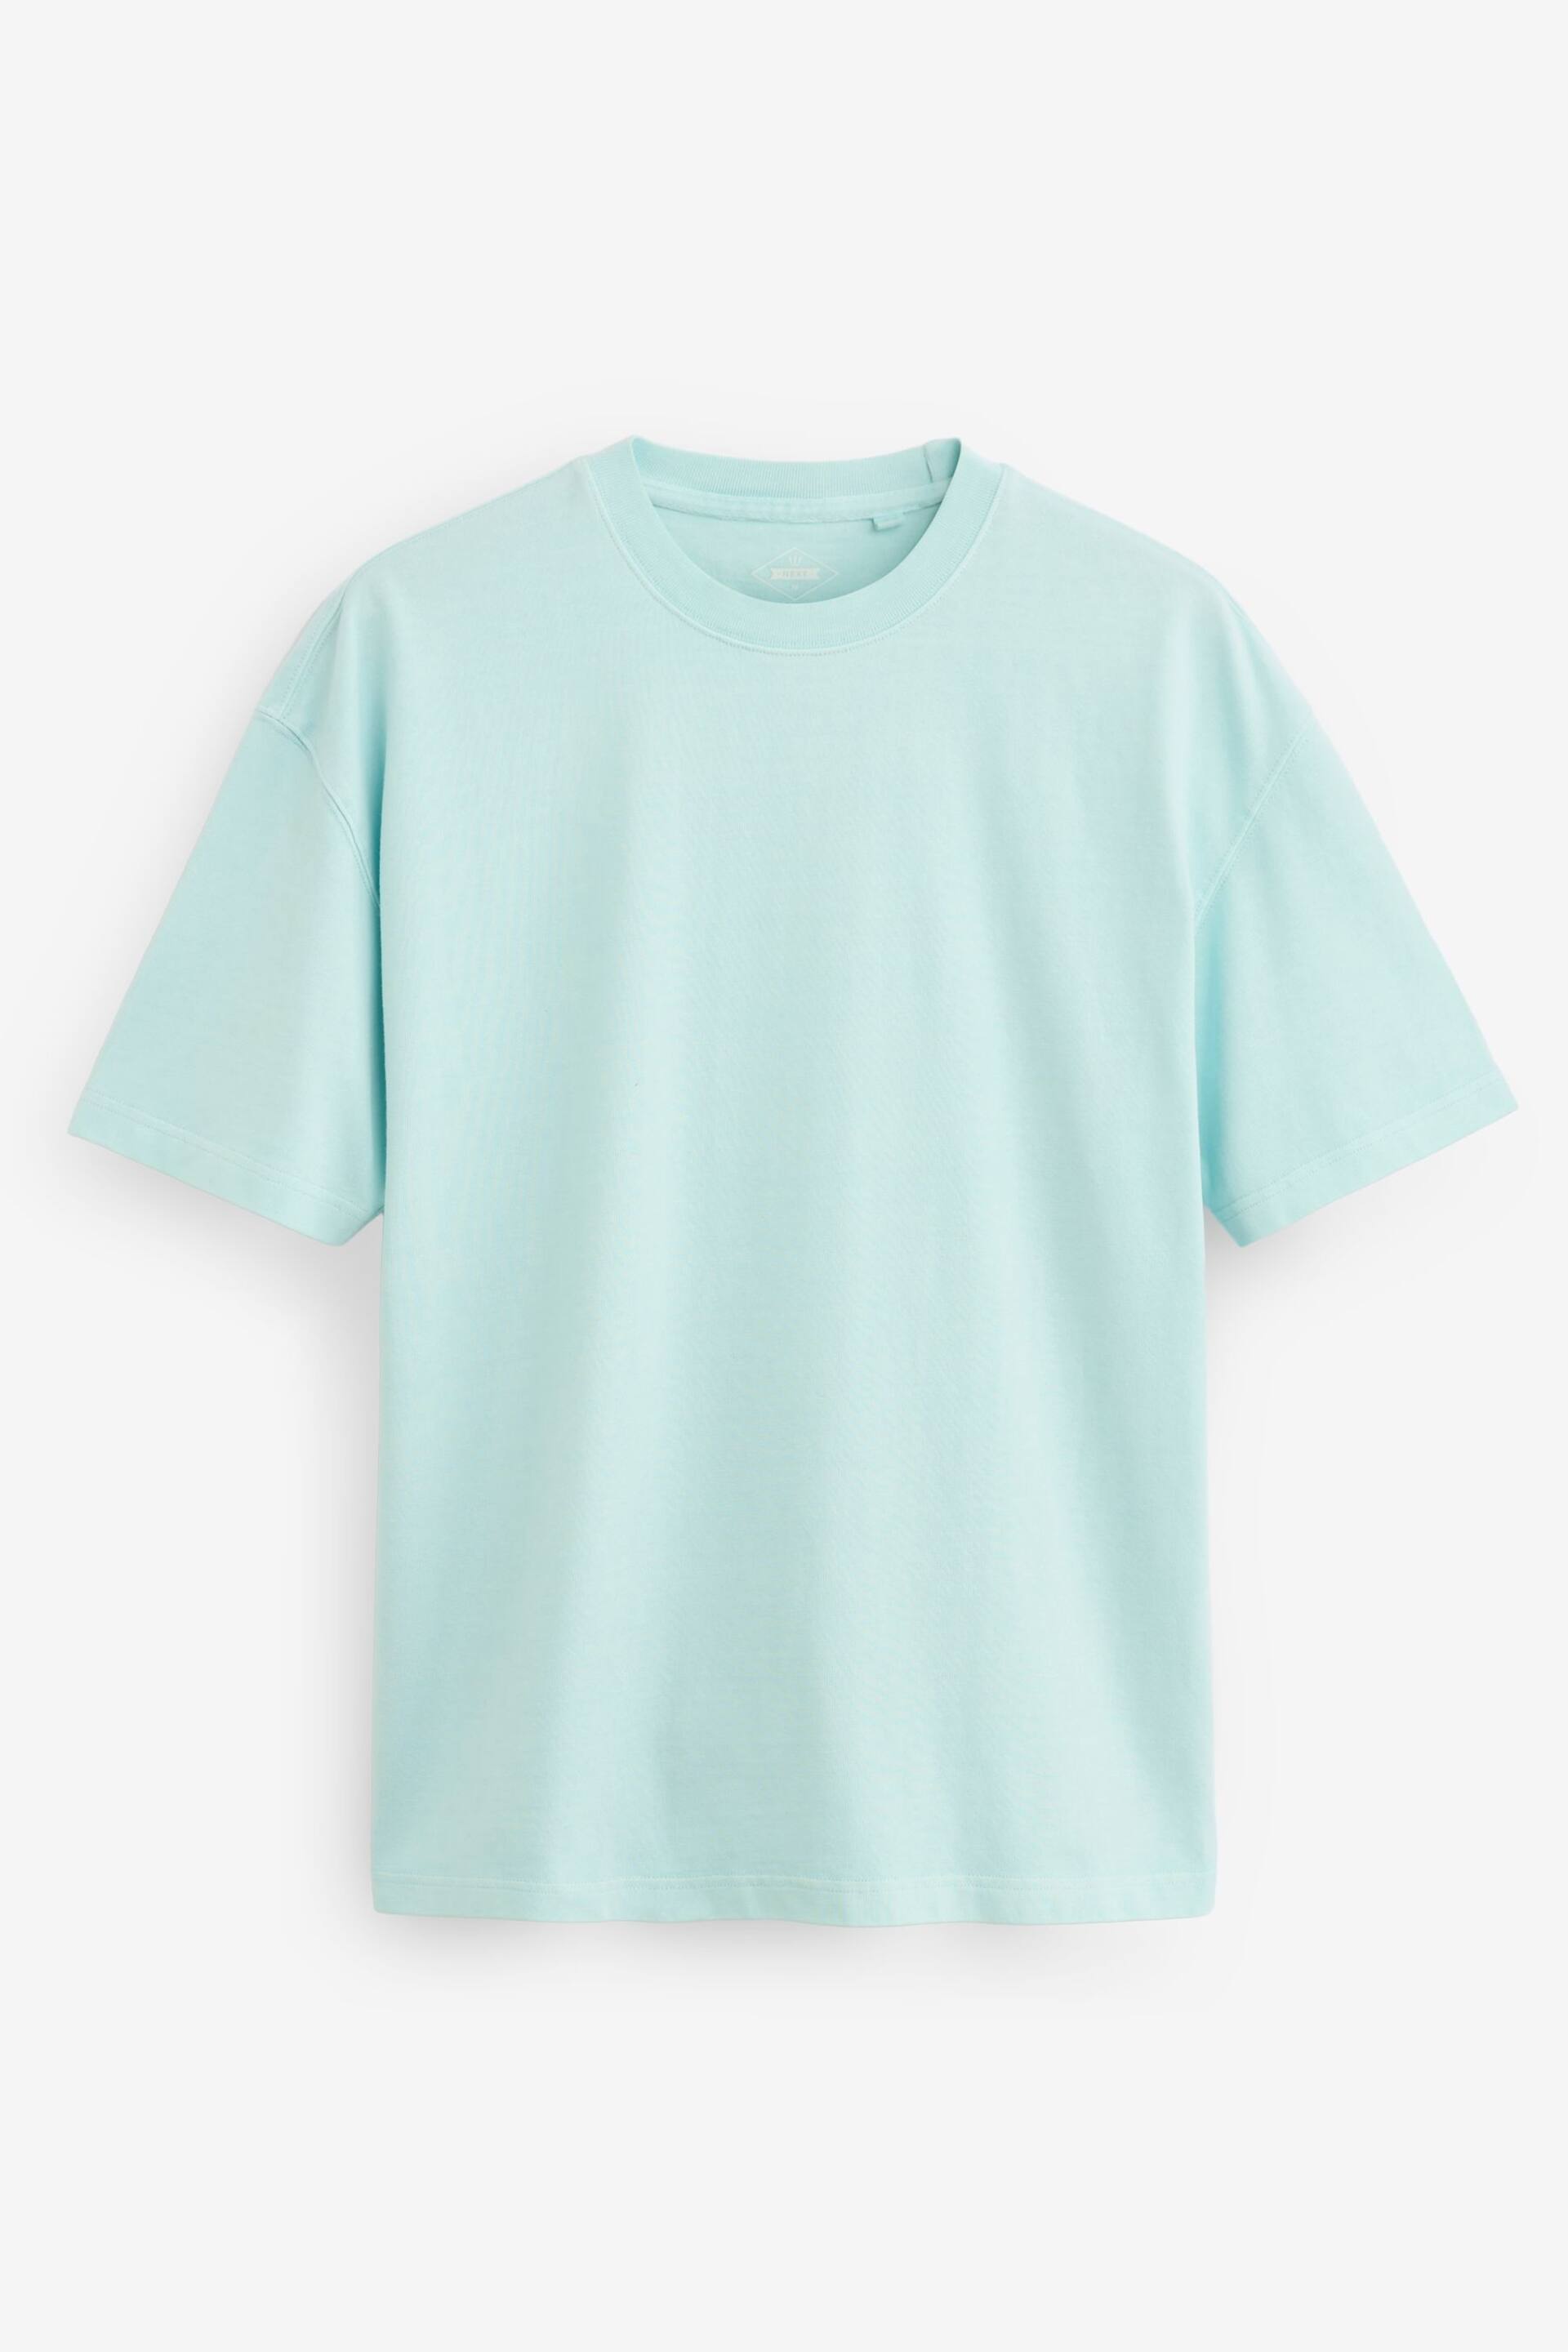 Aqua Blue Garment Dye Relaxed Fit Heavyweight T-Shirt - Image 1 of 3